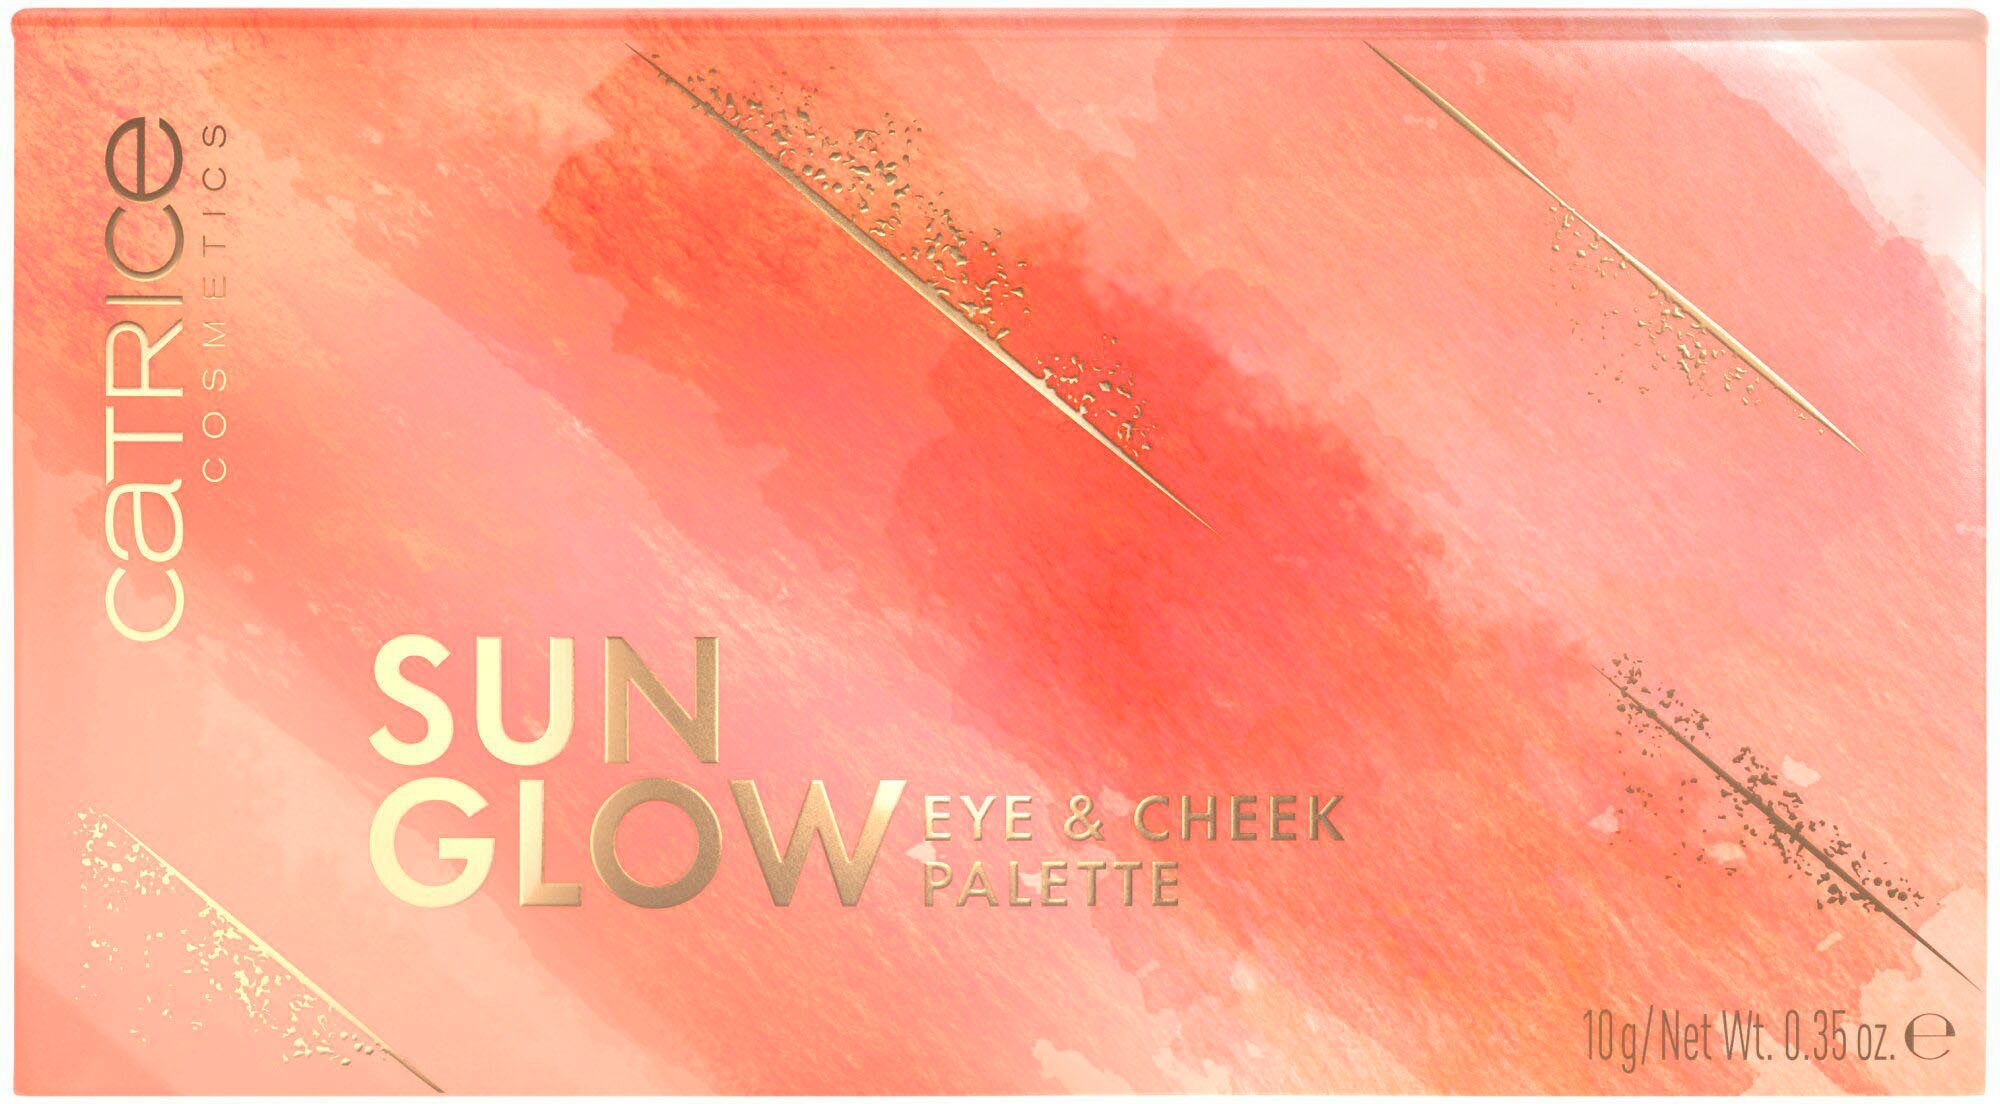 Eye Rouge-Palette & Catrice Cheek Palette